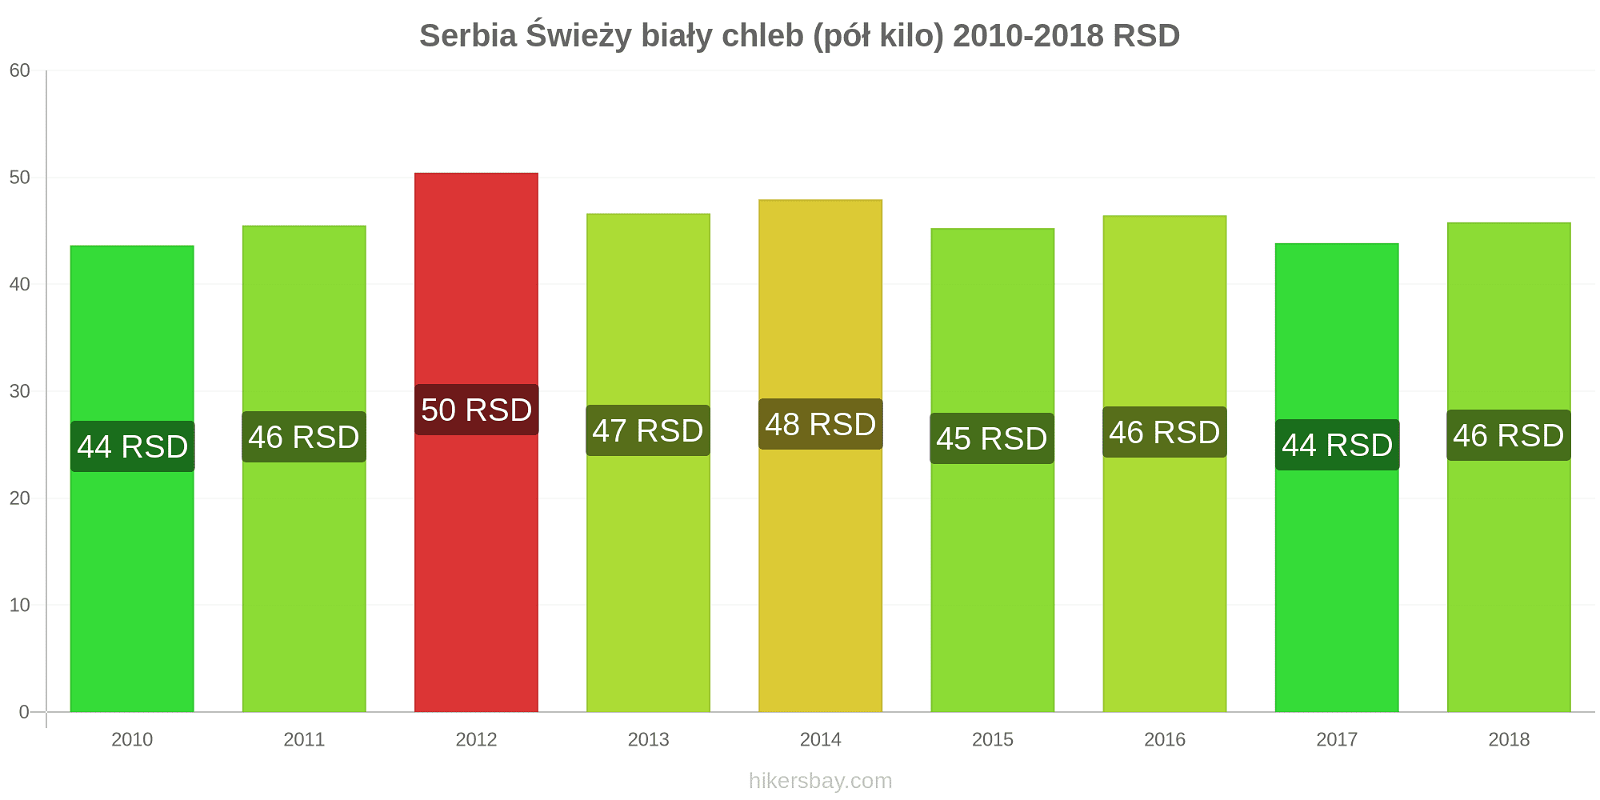 Serbia zmiany cen Chleb pół kilo hikersbay.com